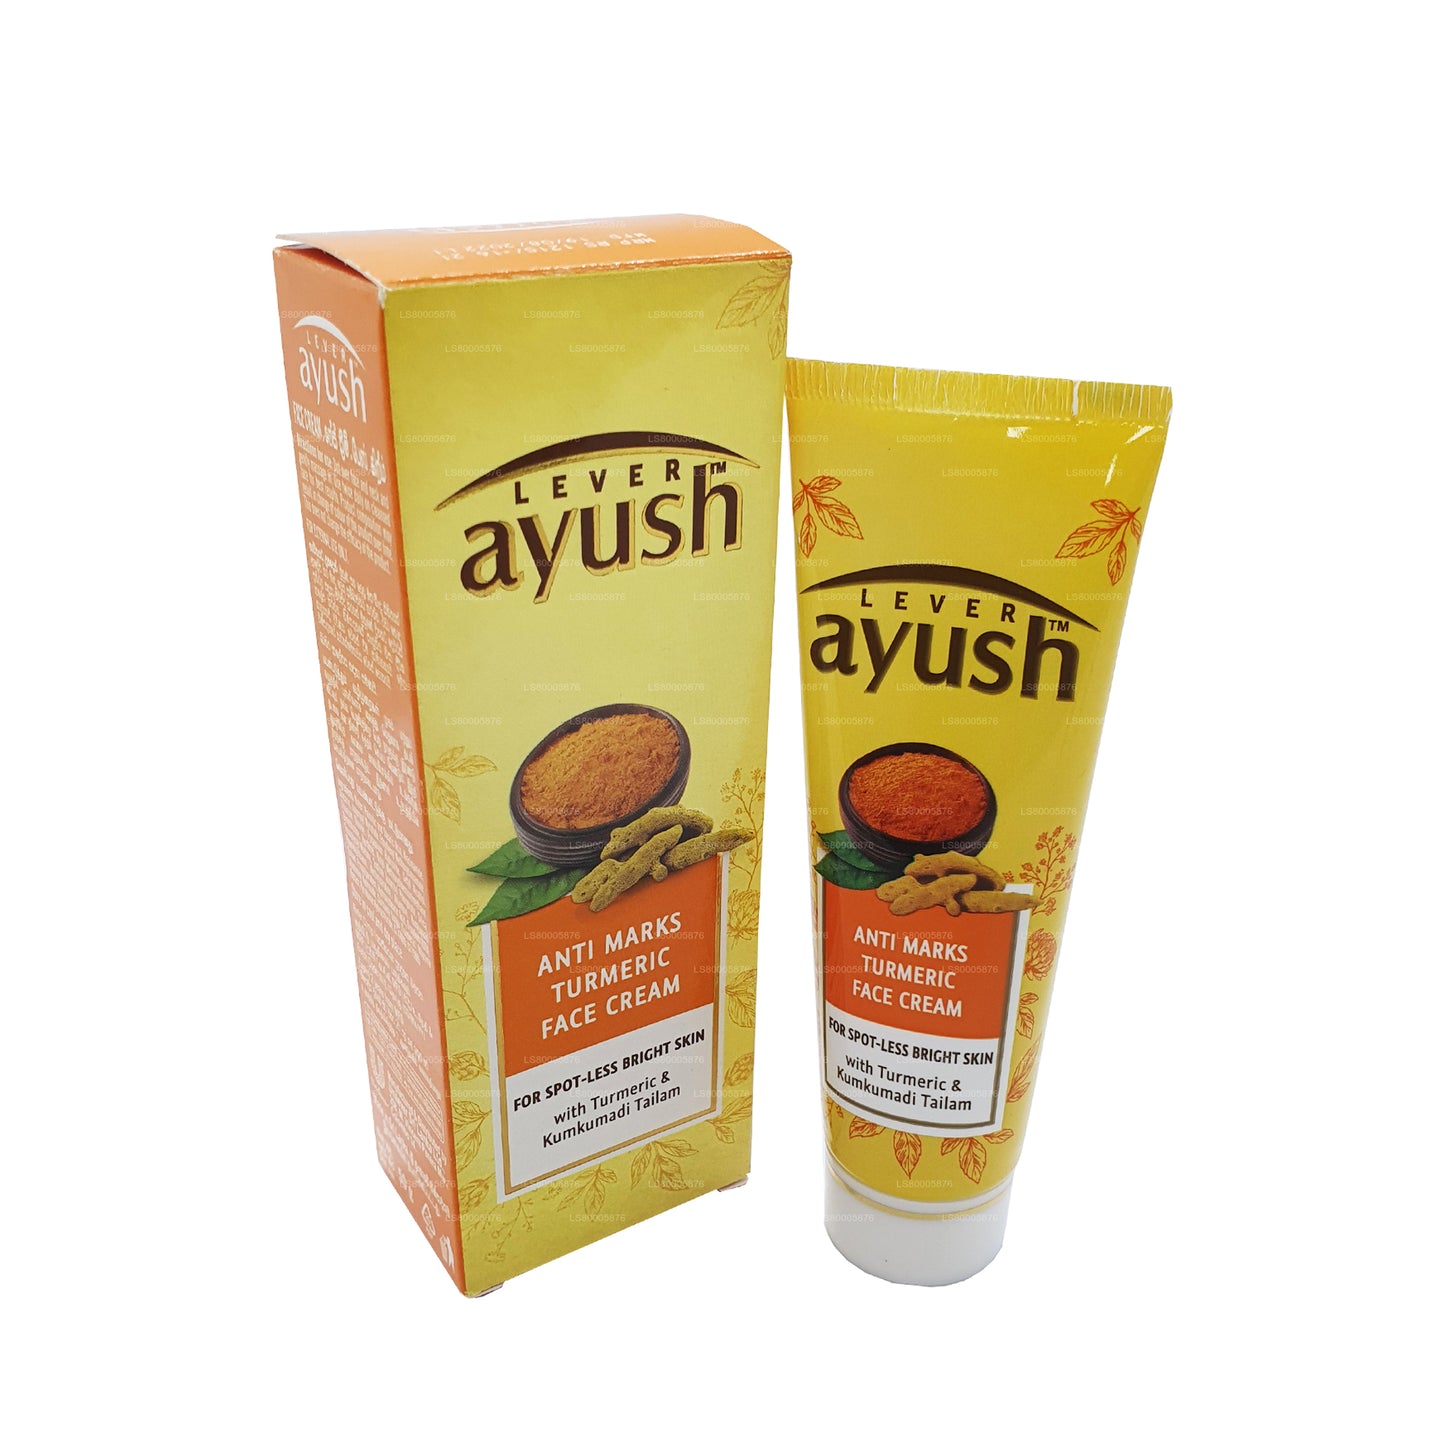 Ayush Turmeric Face Cream (50g)